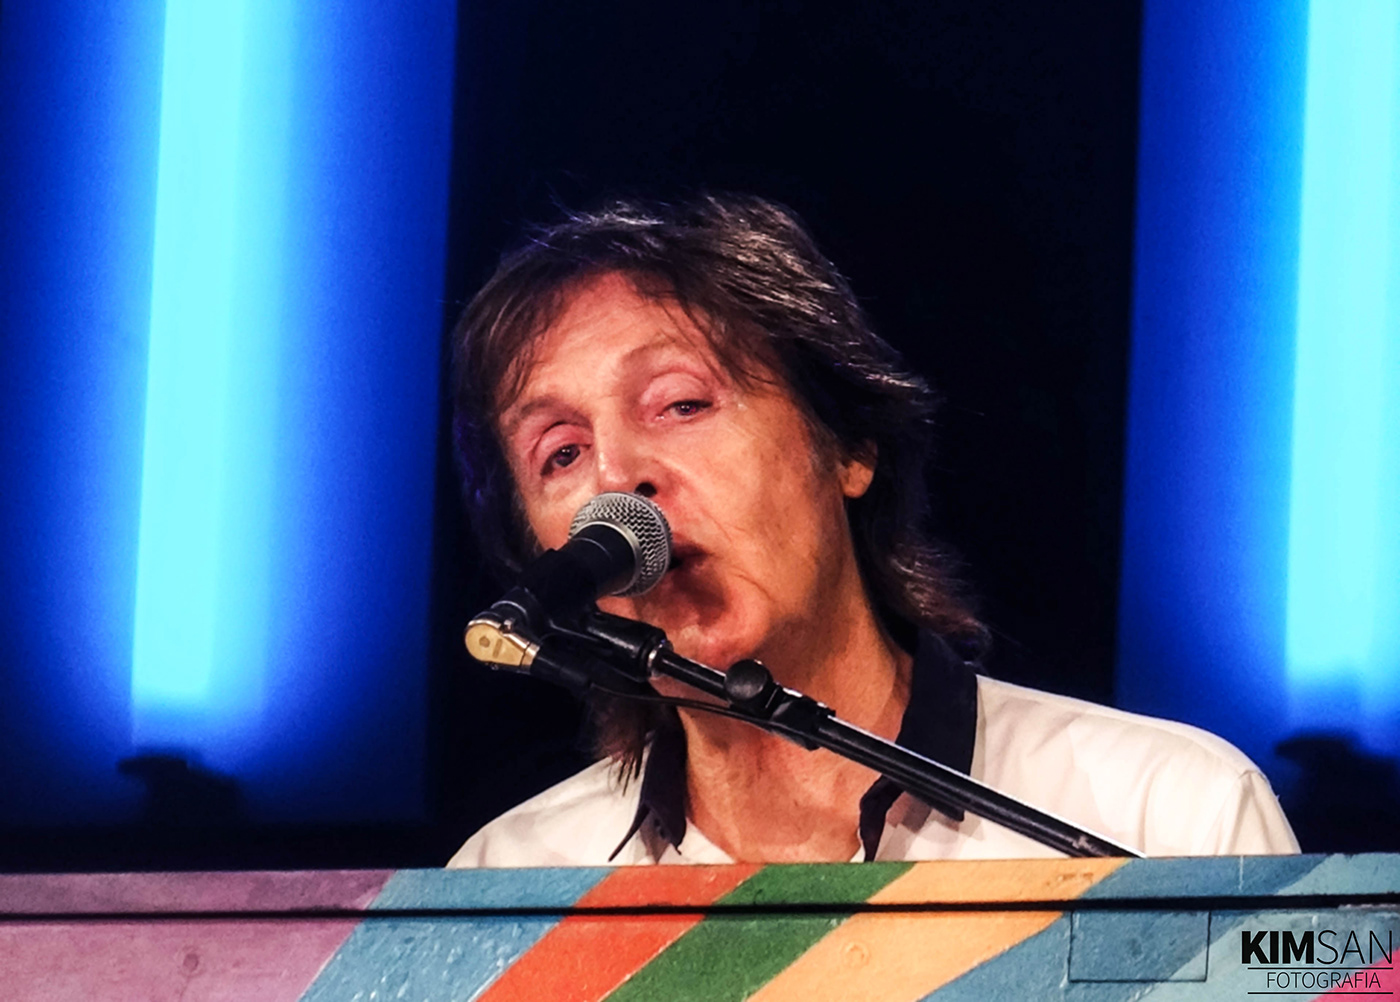 Paul McCartney ben harper music Show batille foster the people